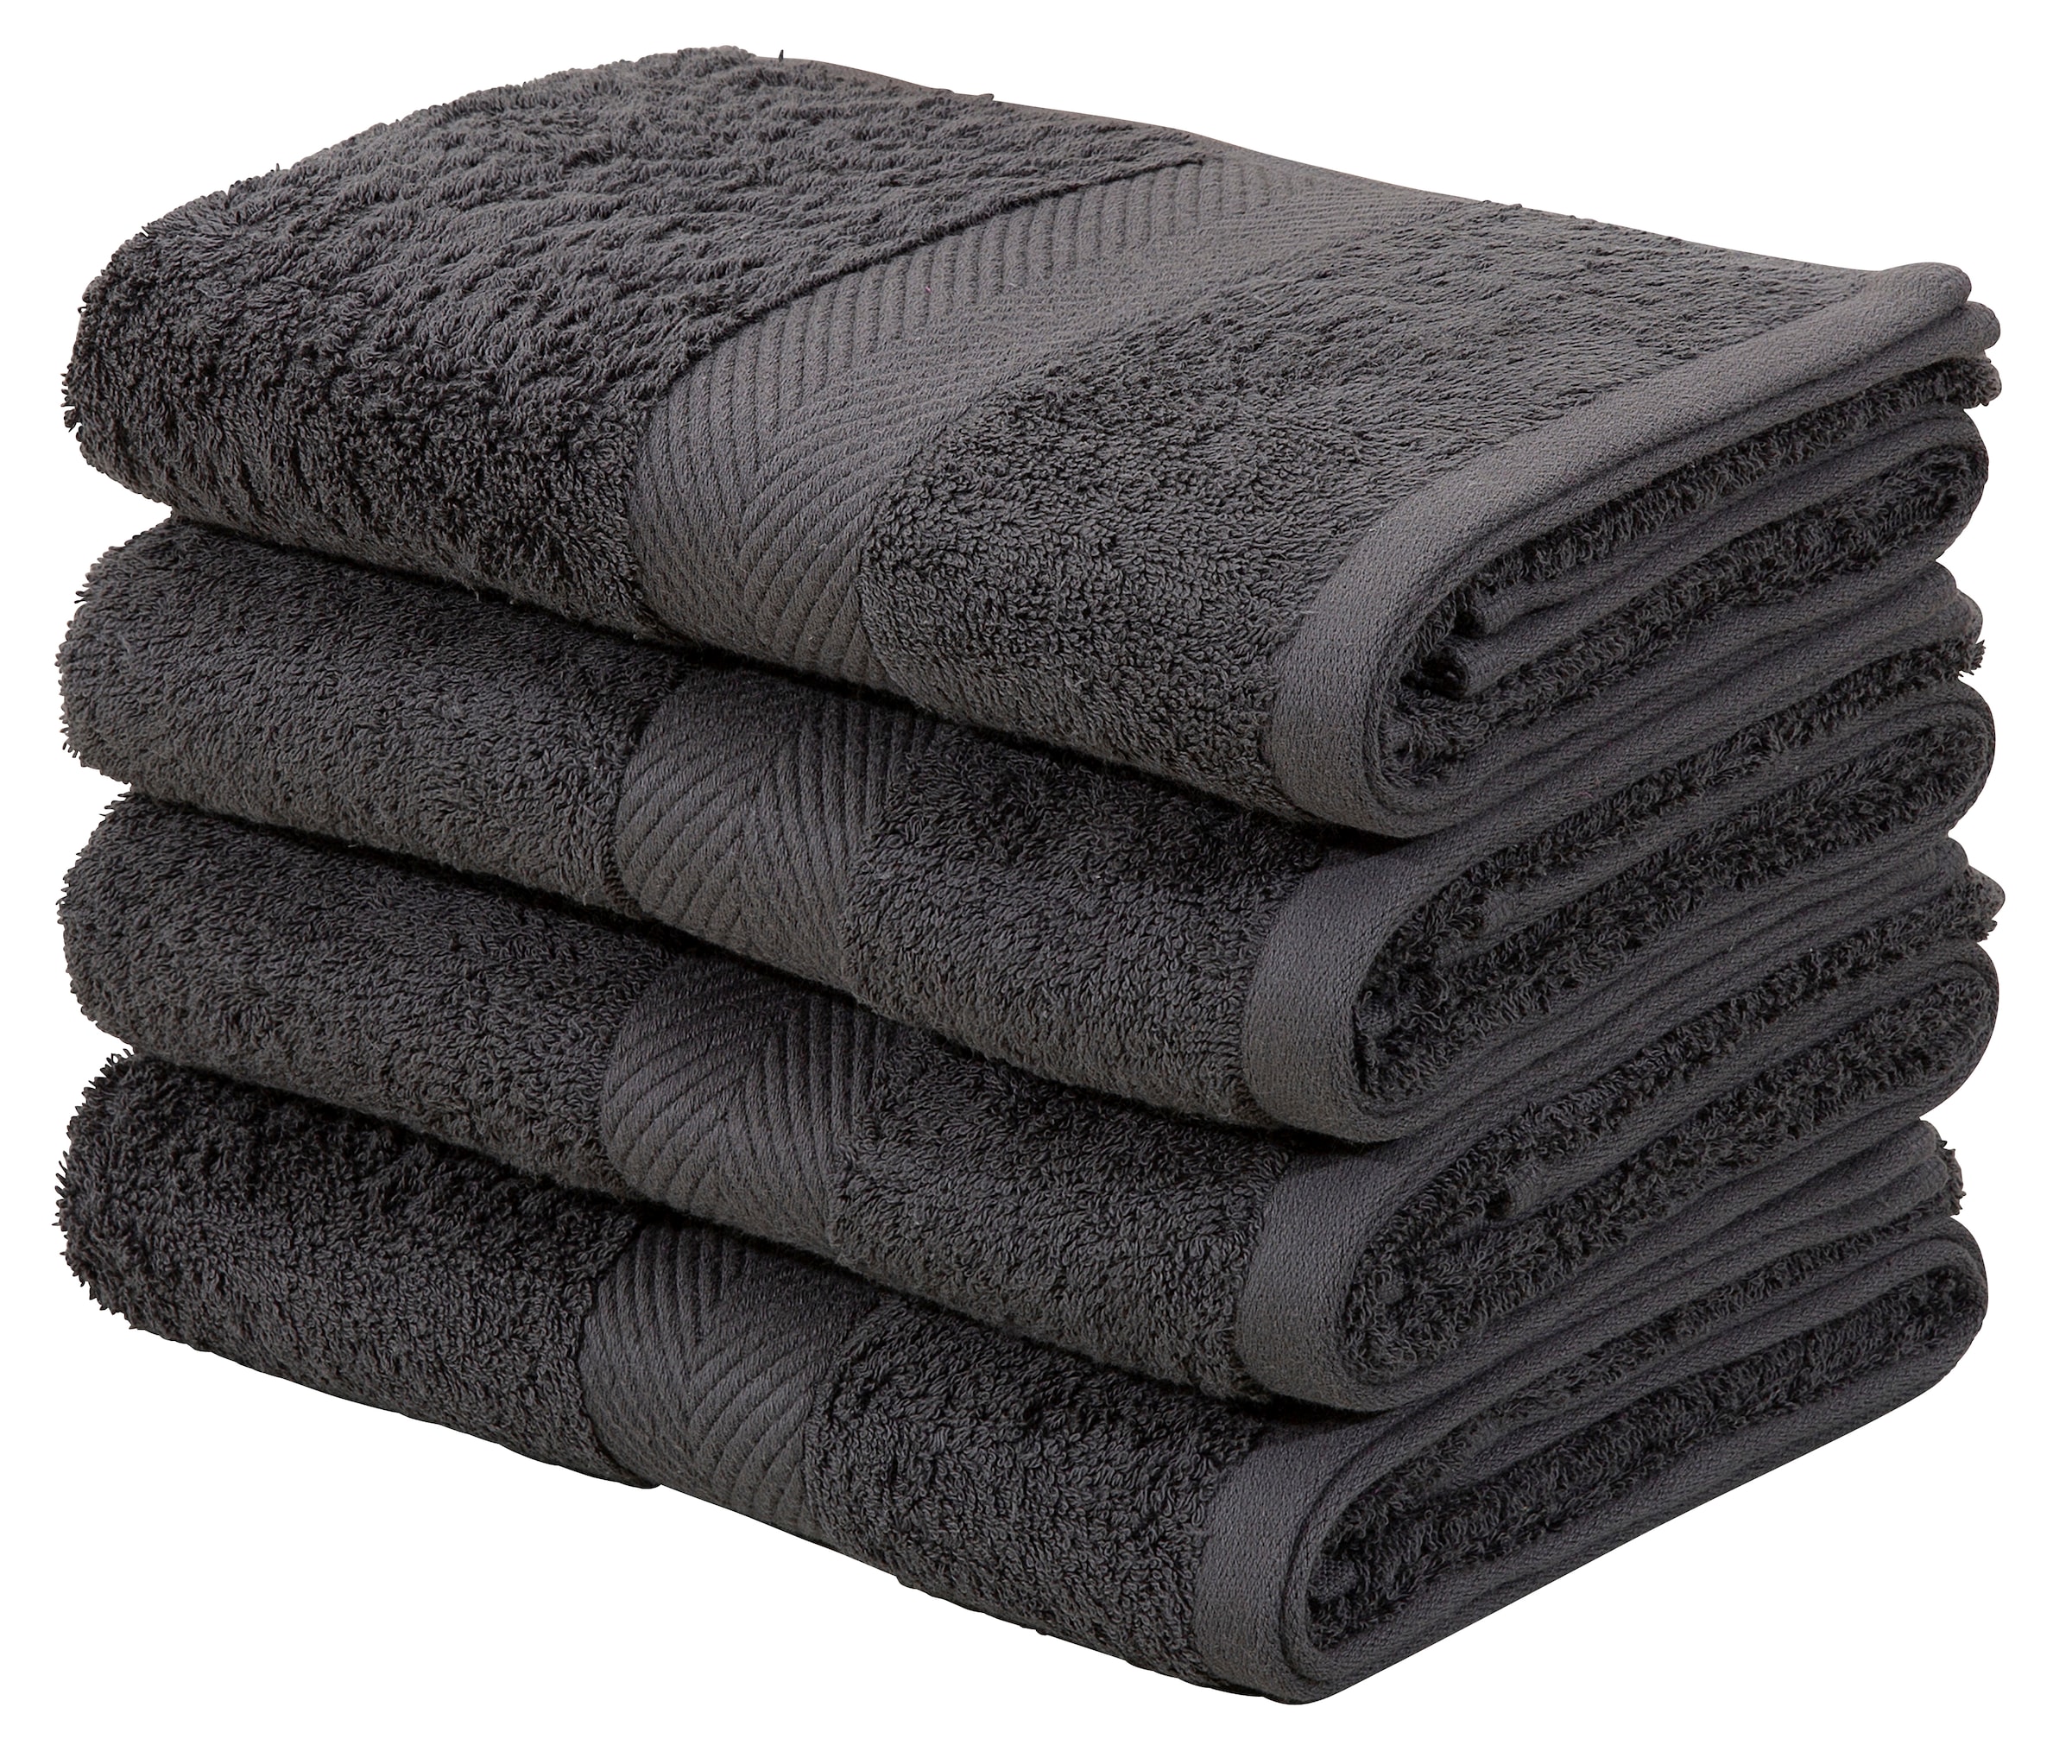 Home affaire Handtücher »Eva, 4 Handtücher 50x100«, (4 St.), Premium-Qualität 550g/m², flauschig, Handtuchset aus 100 % Baumwolle